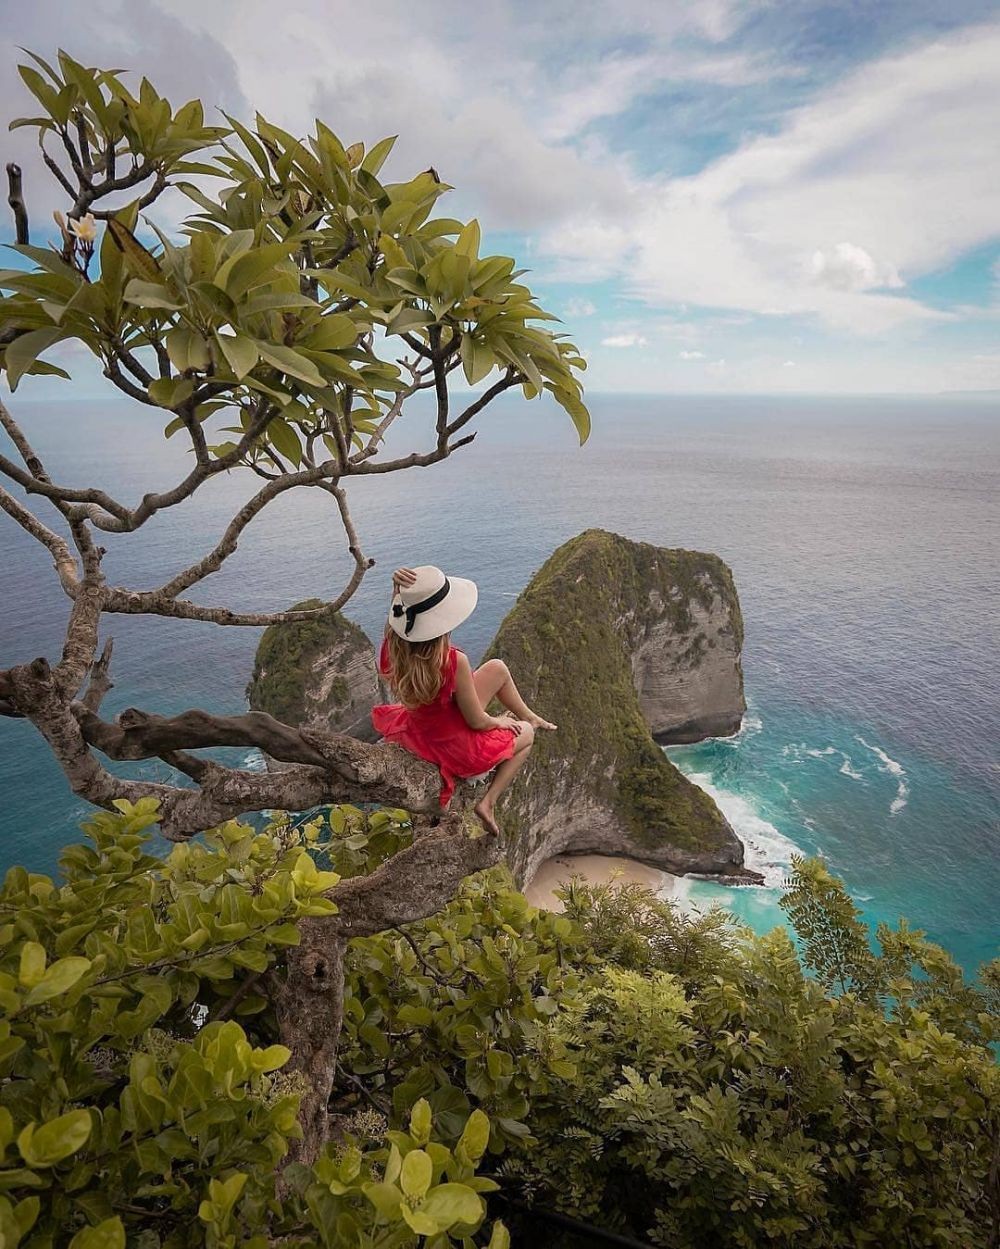 10 Pantai Terbaik di Asia 2020 Versi TripAdvisor, Bali Masuk Lagi